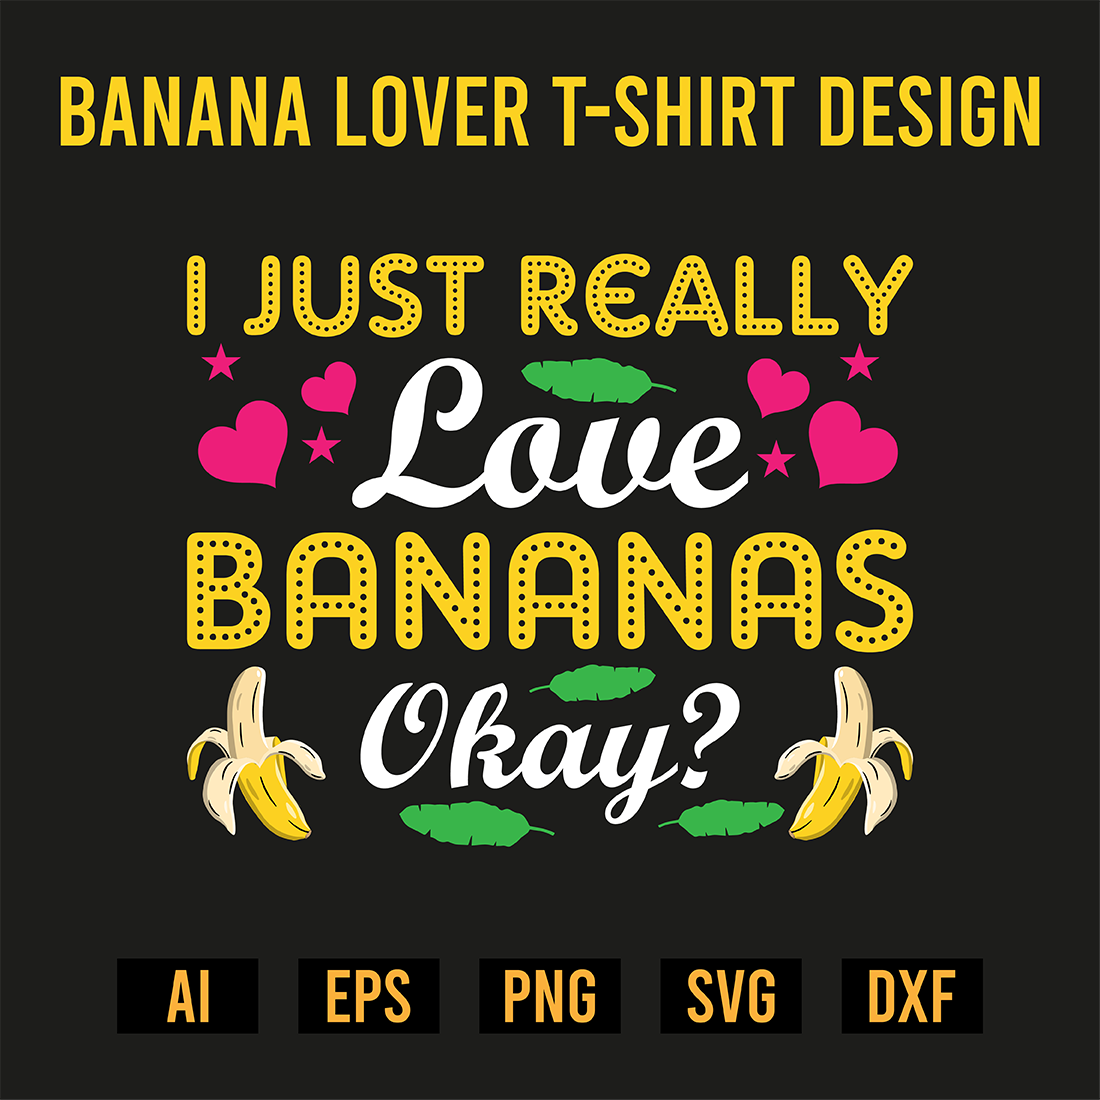 Banana Lover T-Shirt Design preview image.